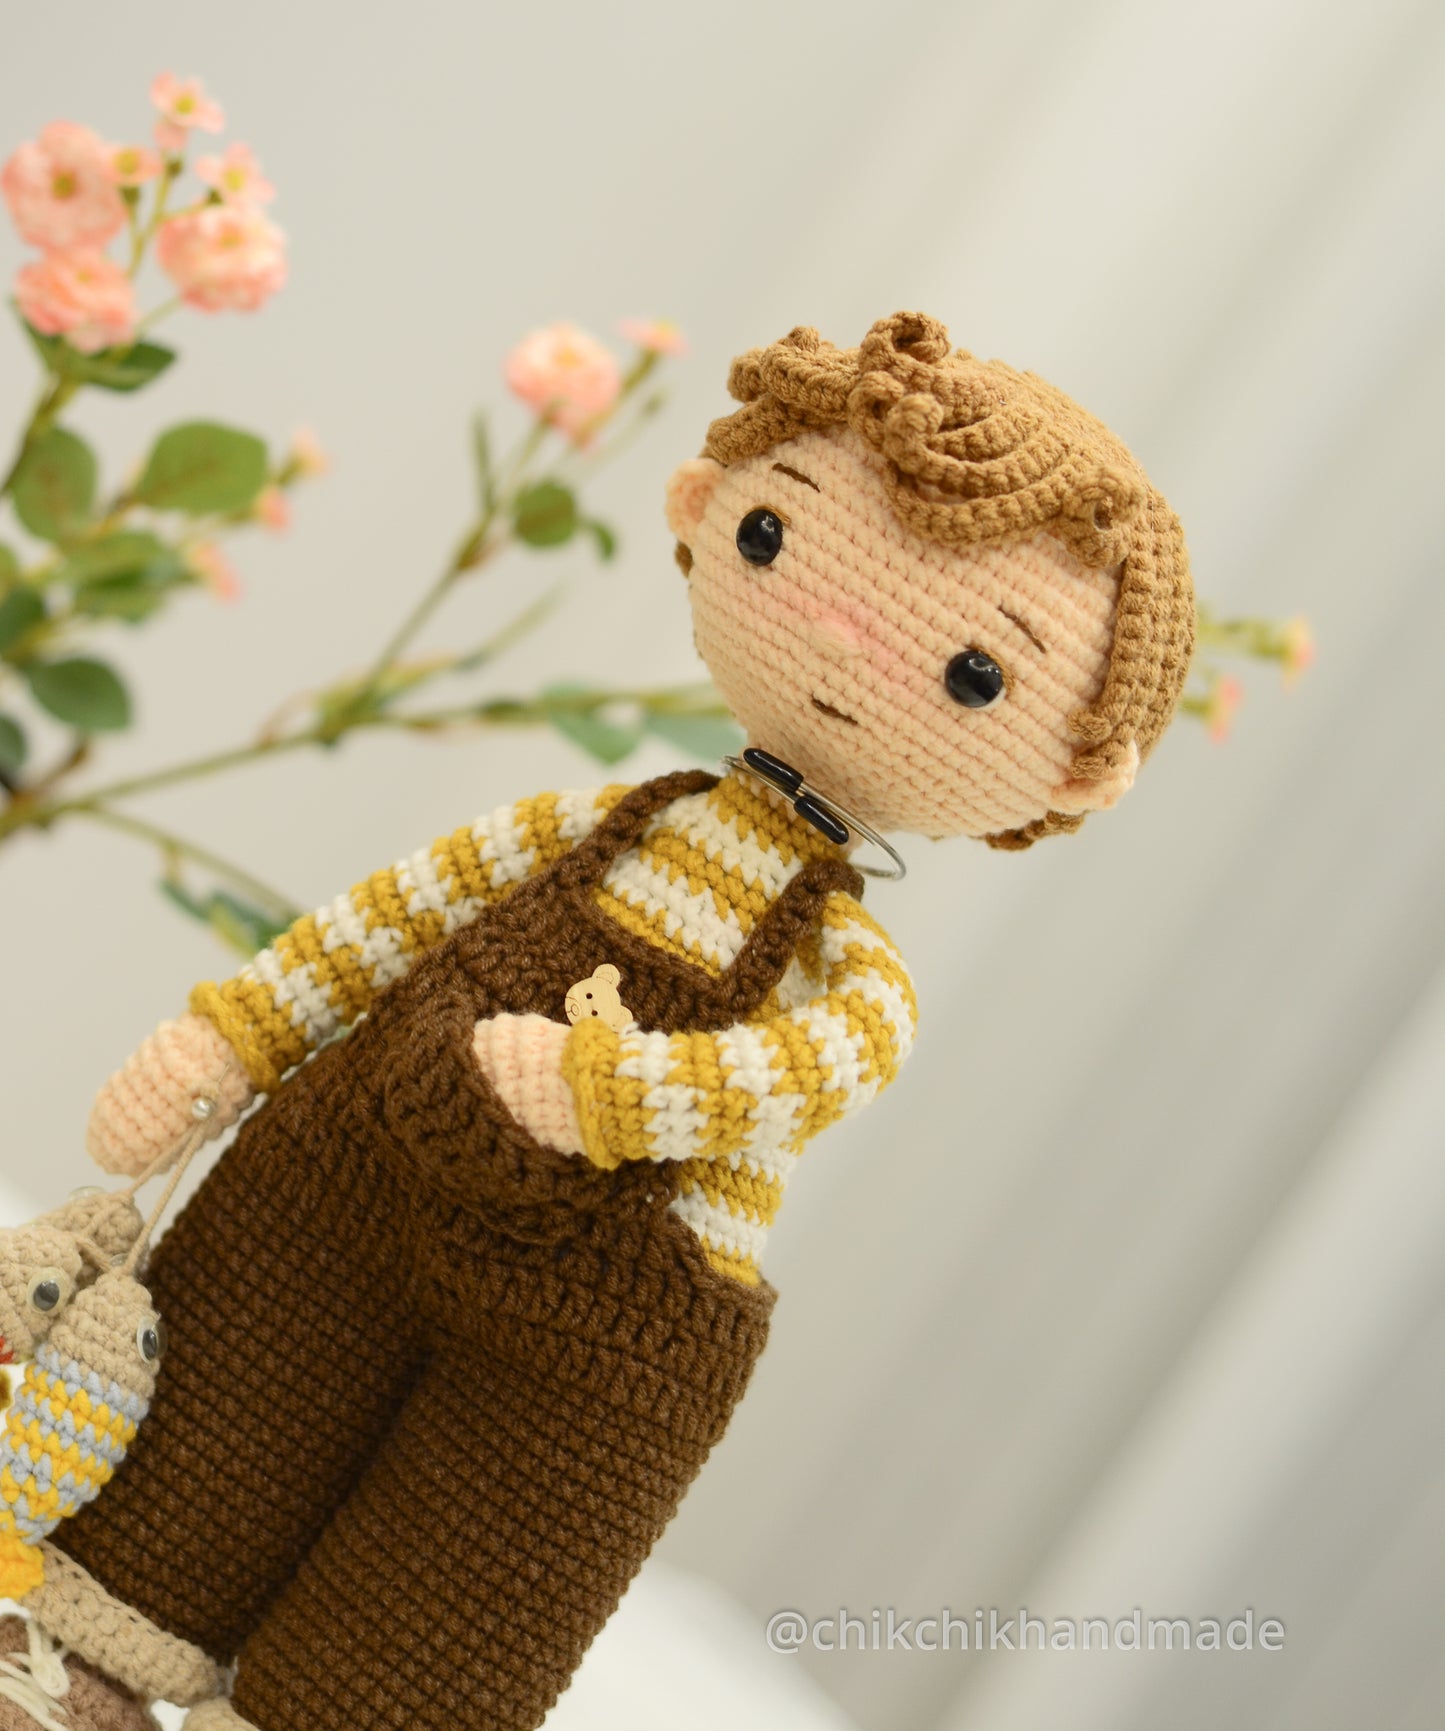 Crochet Doll Pattern Amigurumi, TOMMY The Fisher, PDF in English, French, Dutch, Portuguese